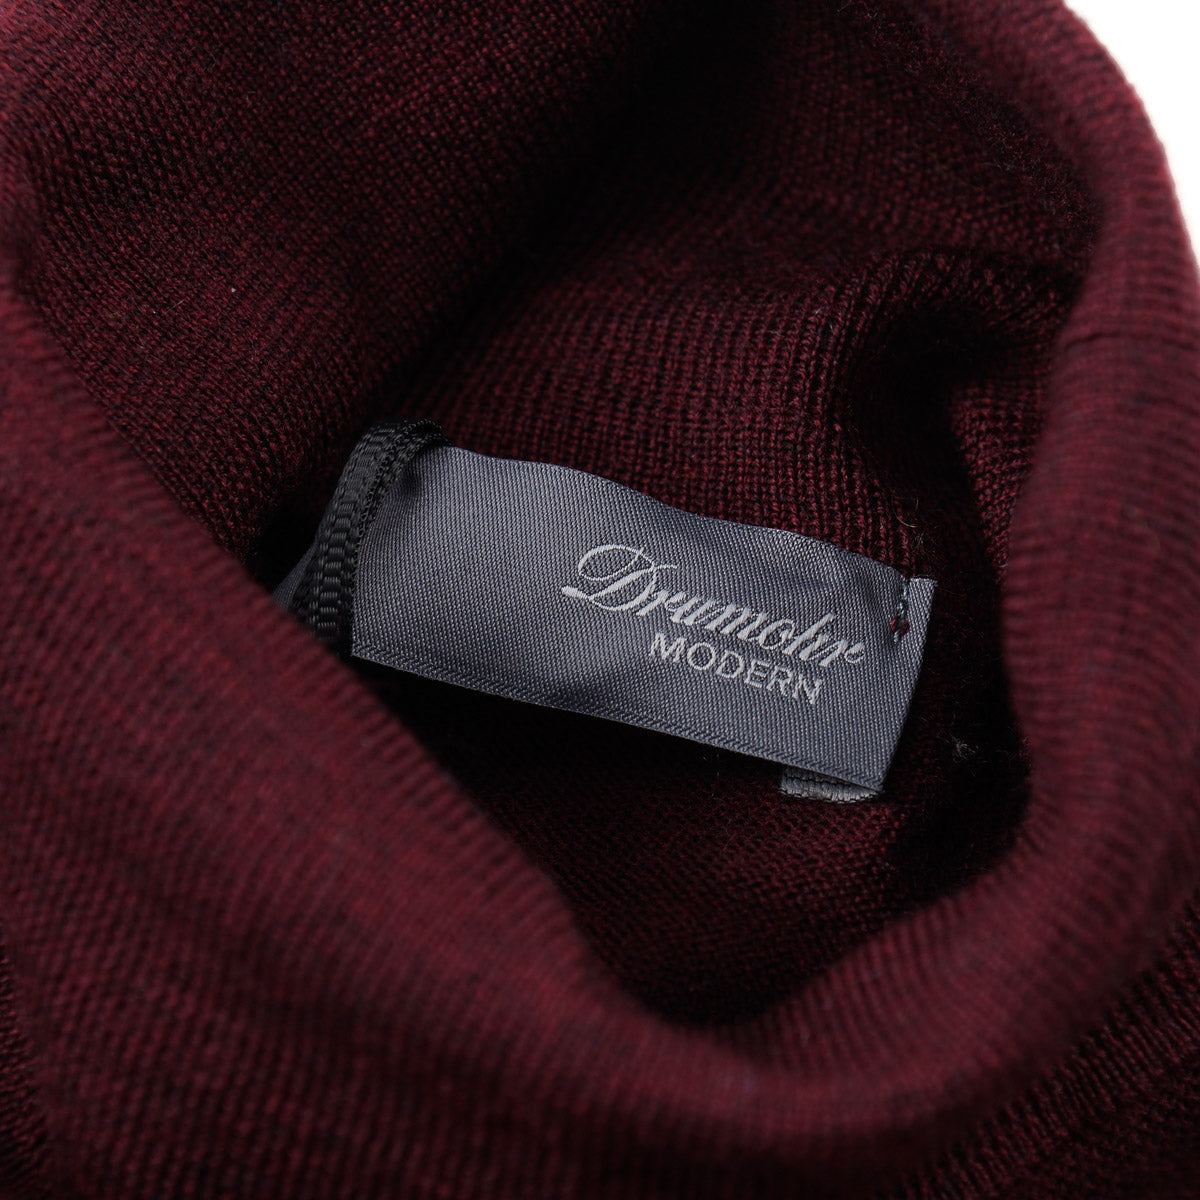 Drumohr Superfine Merino Wool Sweater - Top Shelf Apparel